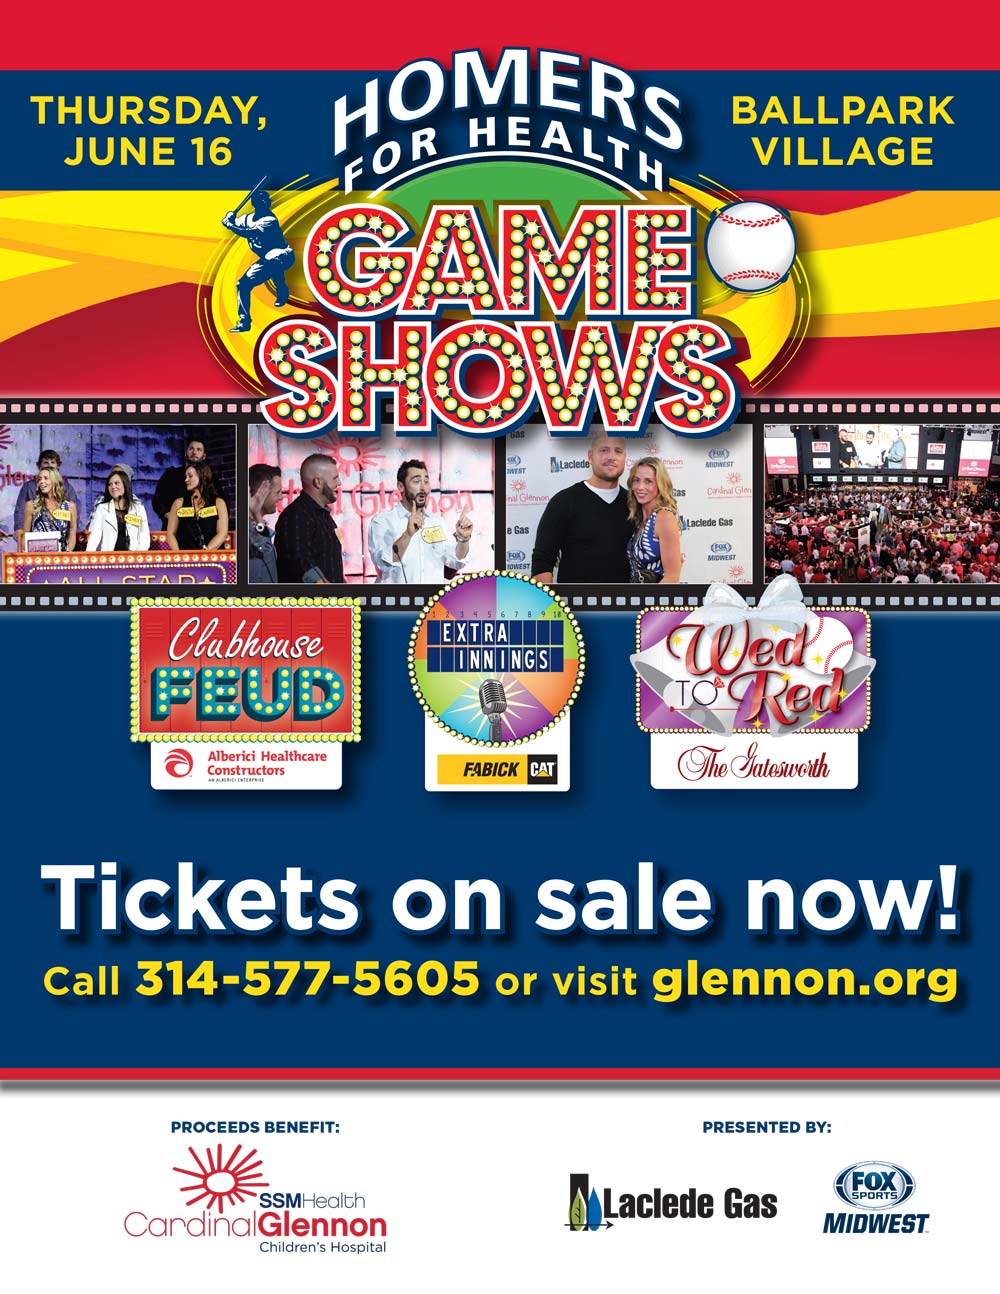 Homers for Health Game Shows Thursday, June 16, 2016 at Ballpark Village